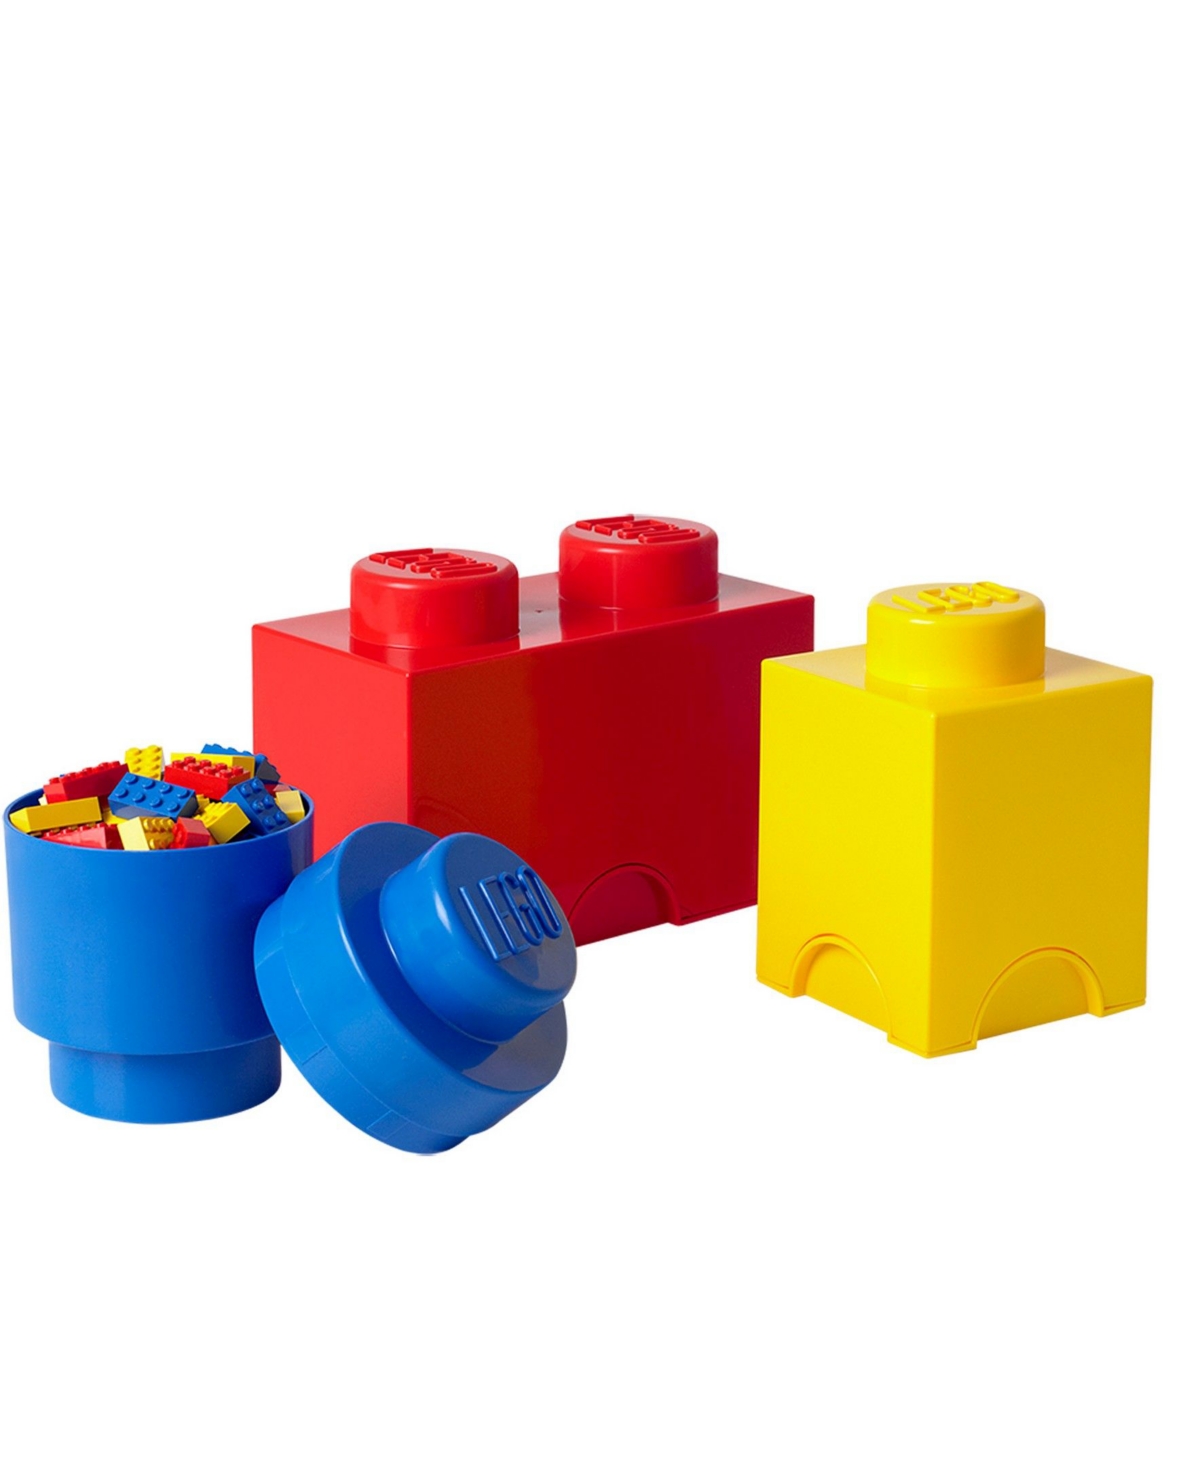 Lego Storage Classic Brick, Set Of 3 In Multi